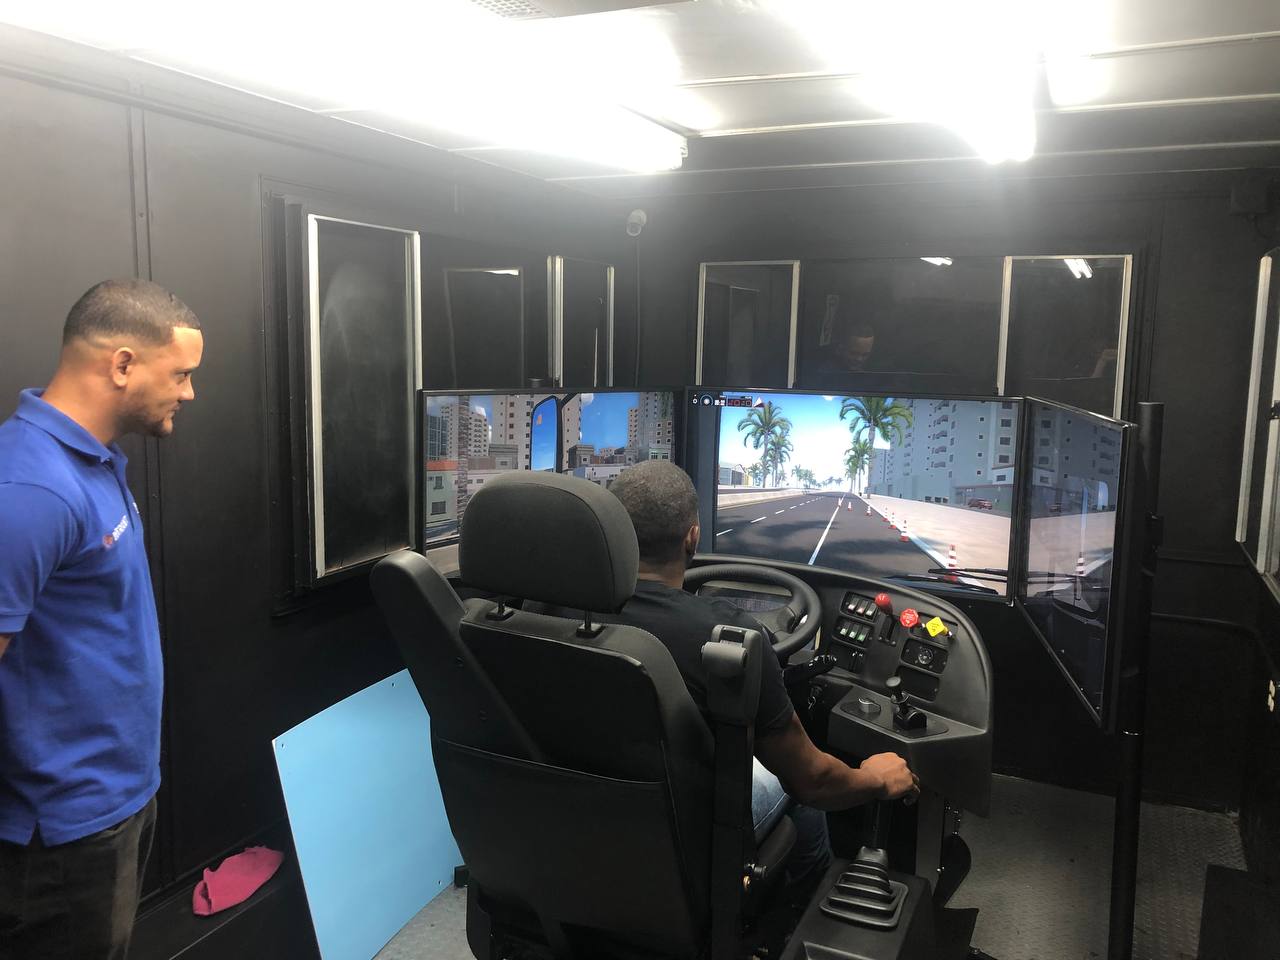 examen de conducir INTRANT República Dominicana con simulador simumak